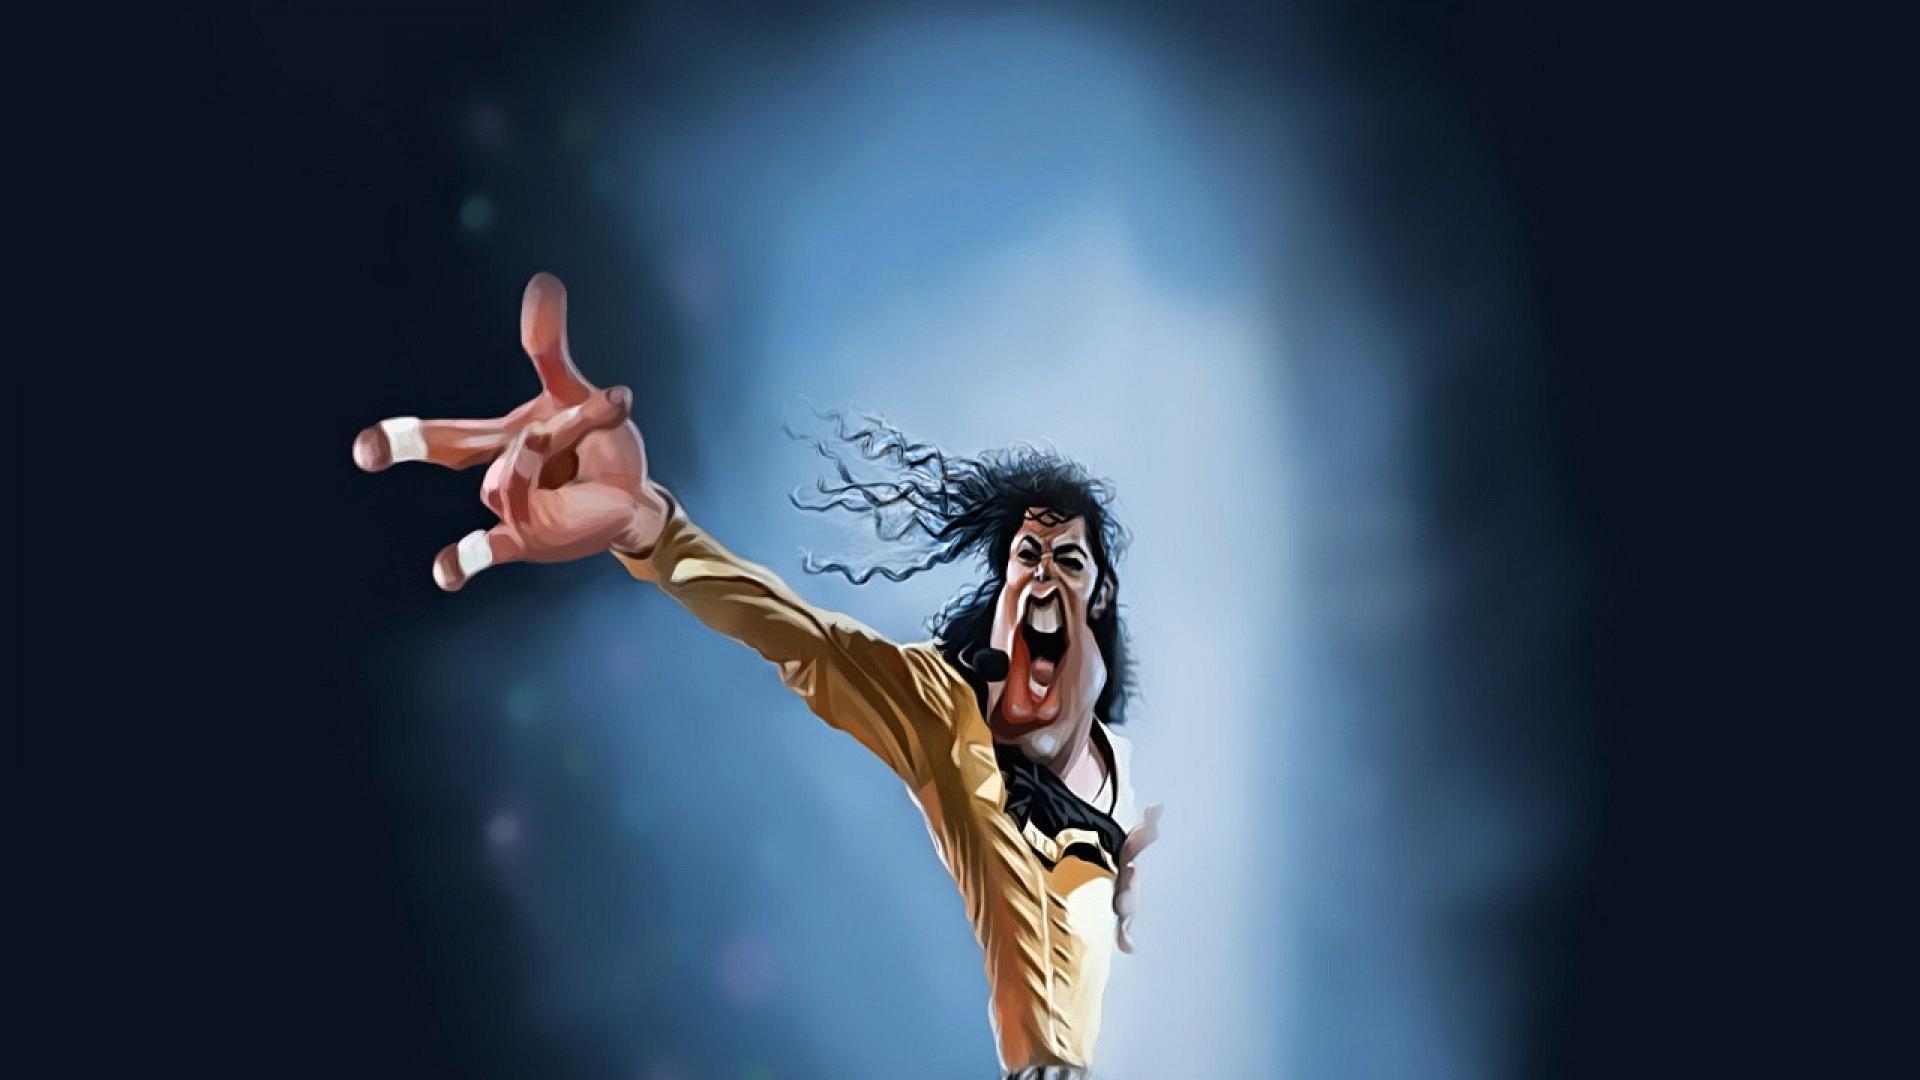 Wallpaper Funny Michael Jackson Caricature x 1080